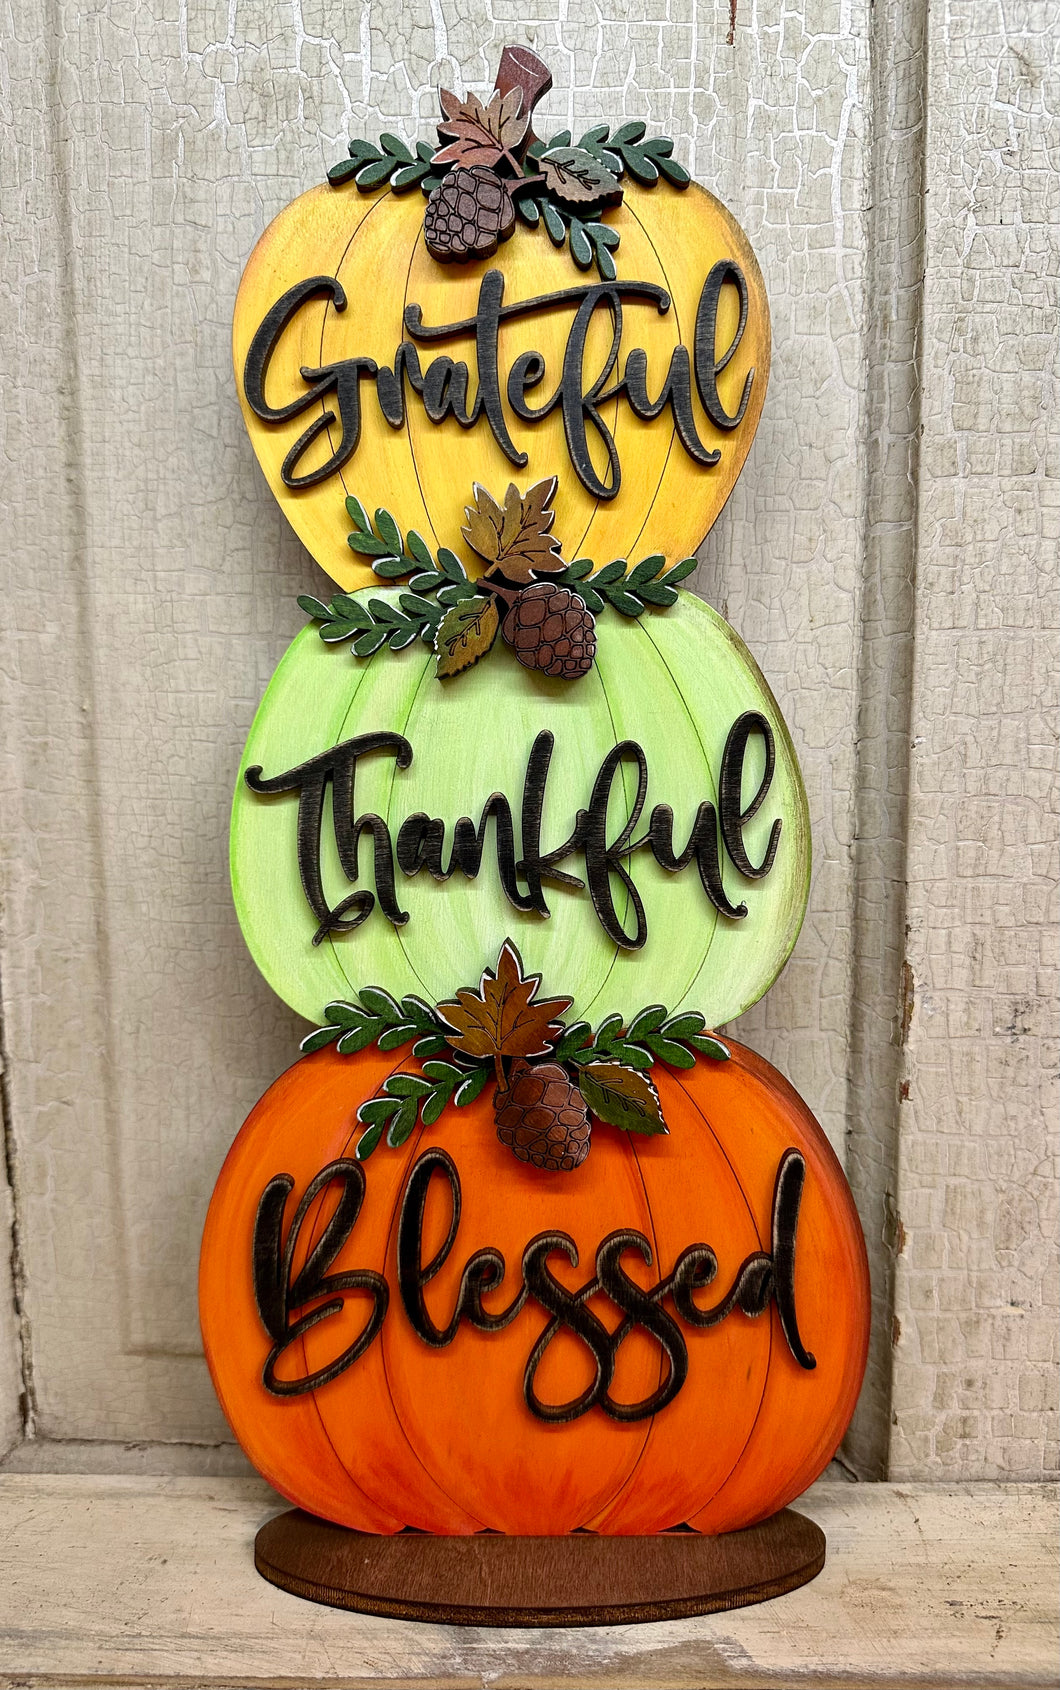 Grateful Thankful Blessed Pumpkin Stack - Unpainted